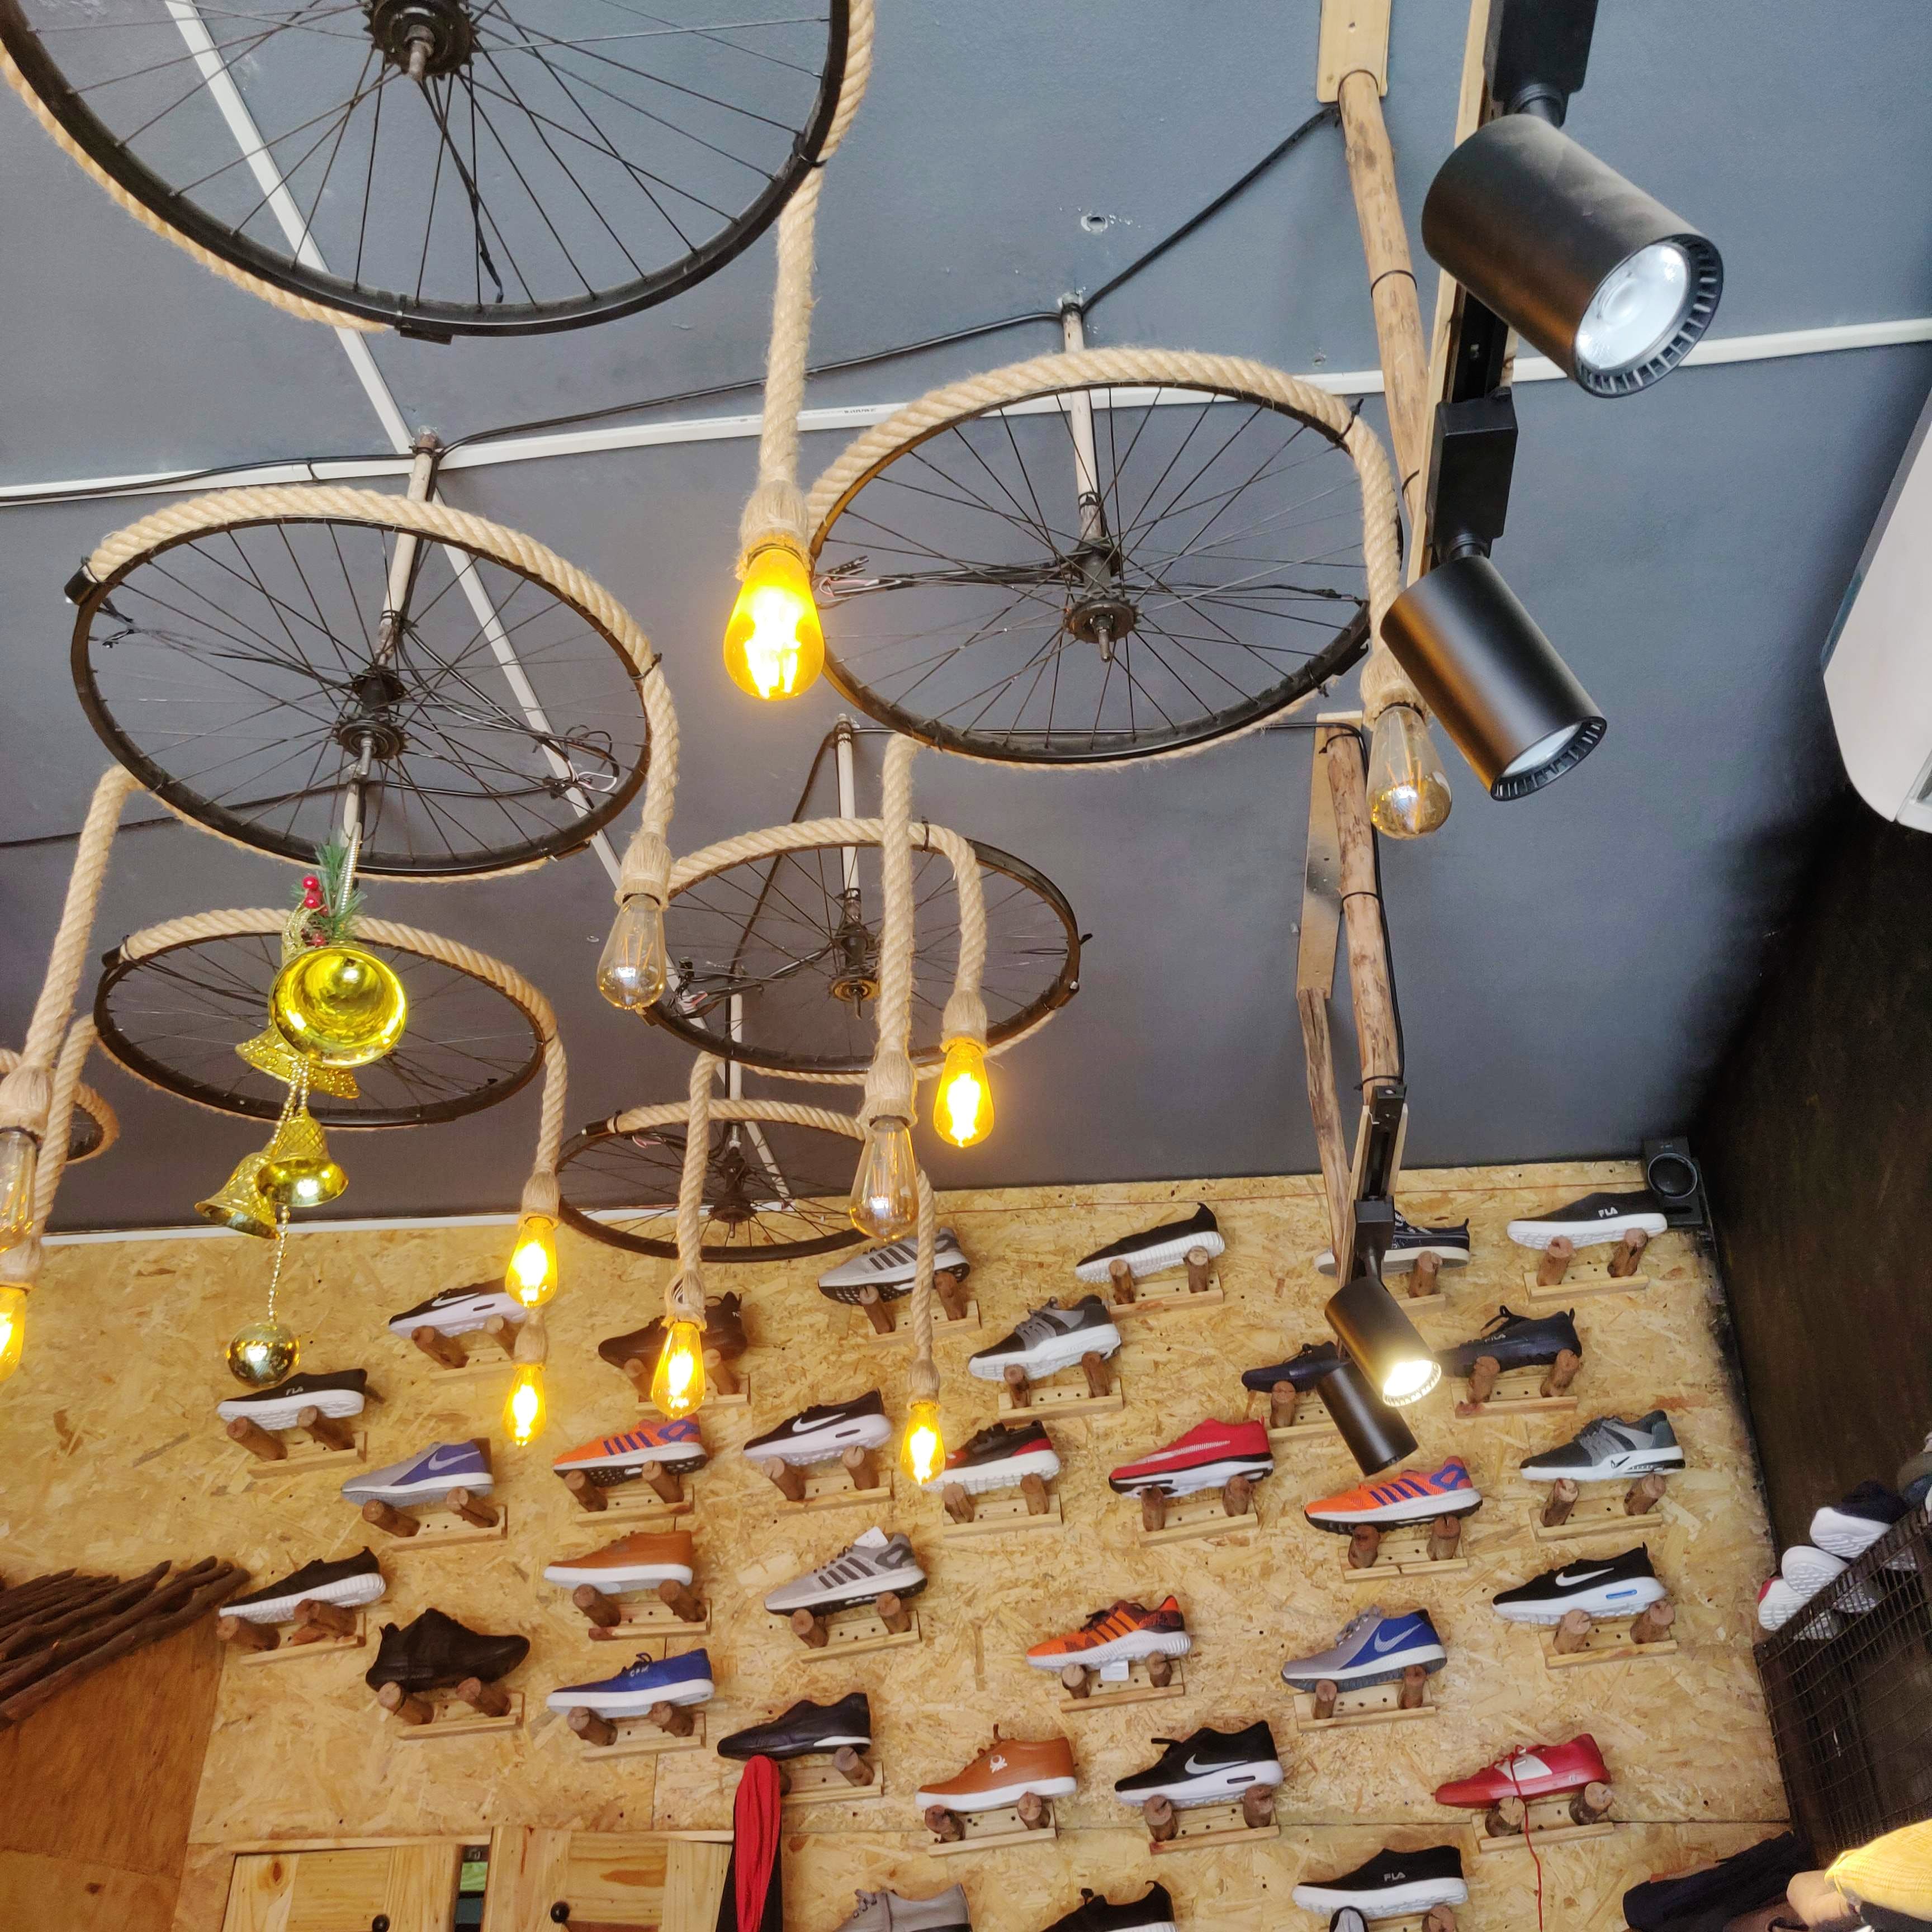 Lighting,Bicycle wheel,Bicycle part,Bicycle,Light fixture,Chandelier,Iron,Metal,Room,Bicycle fork